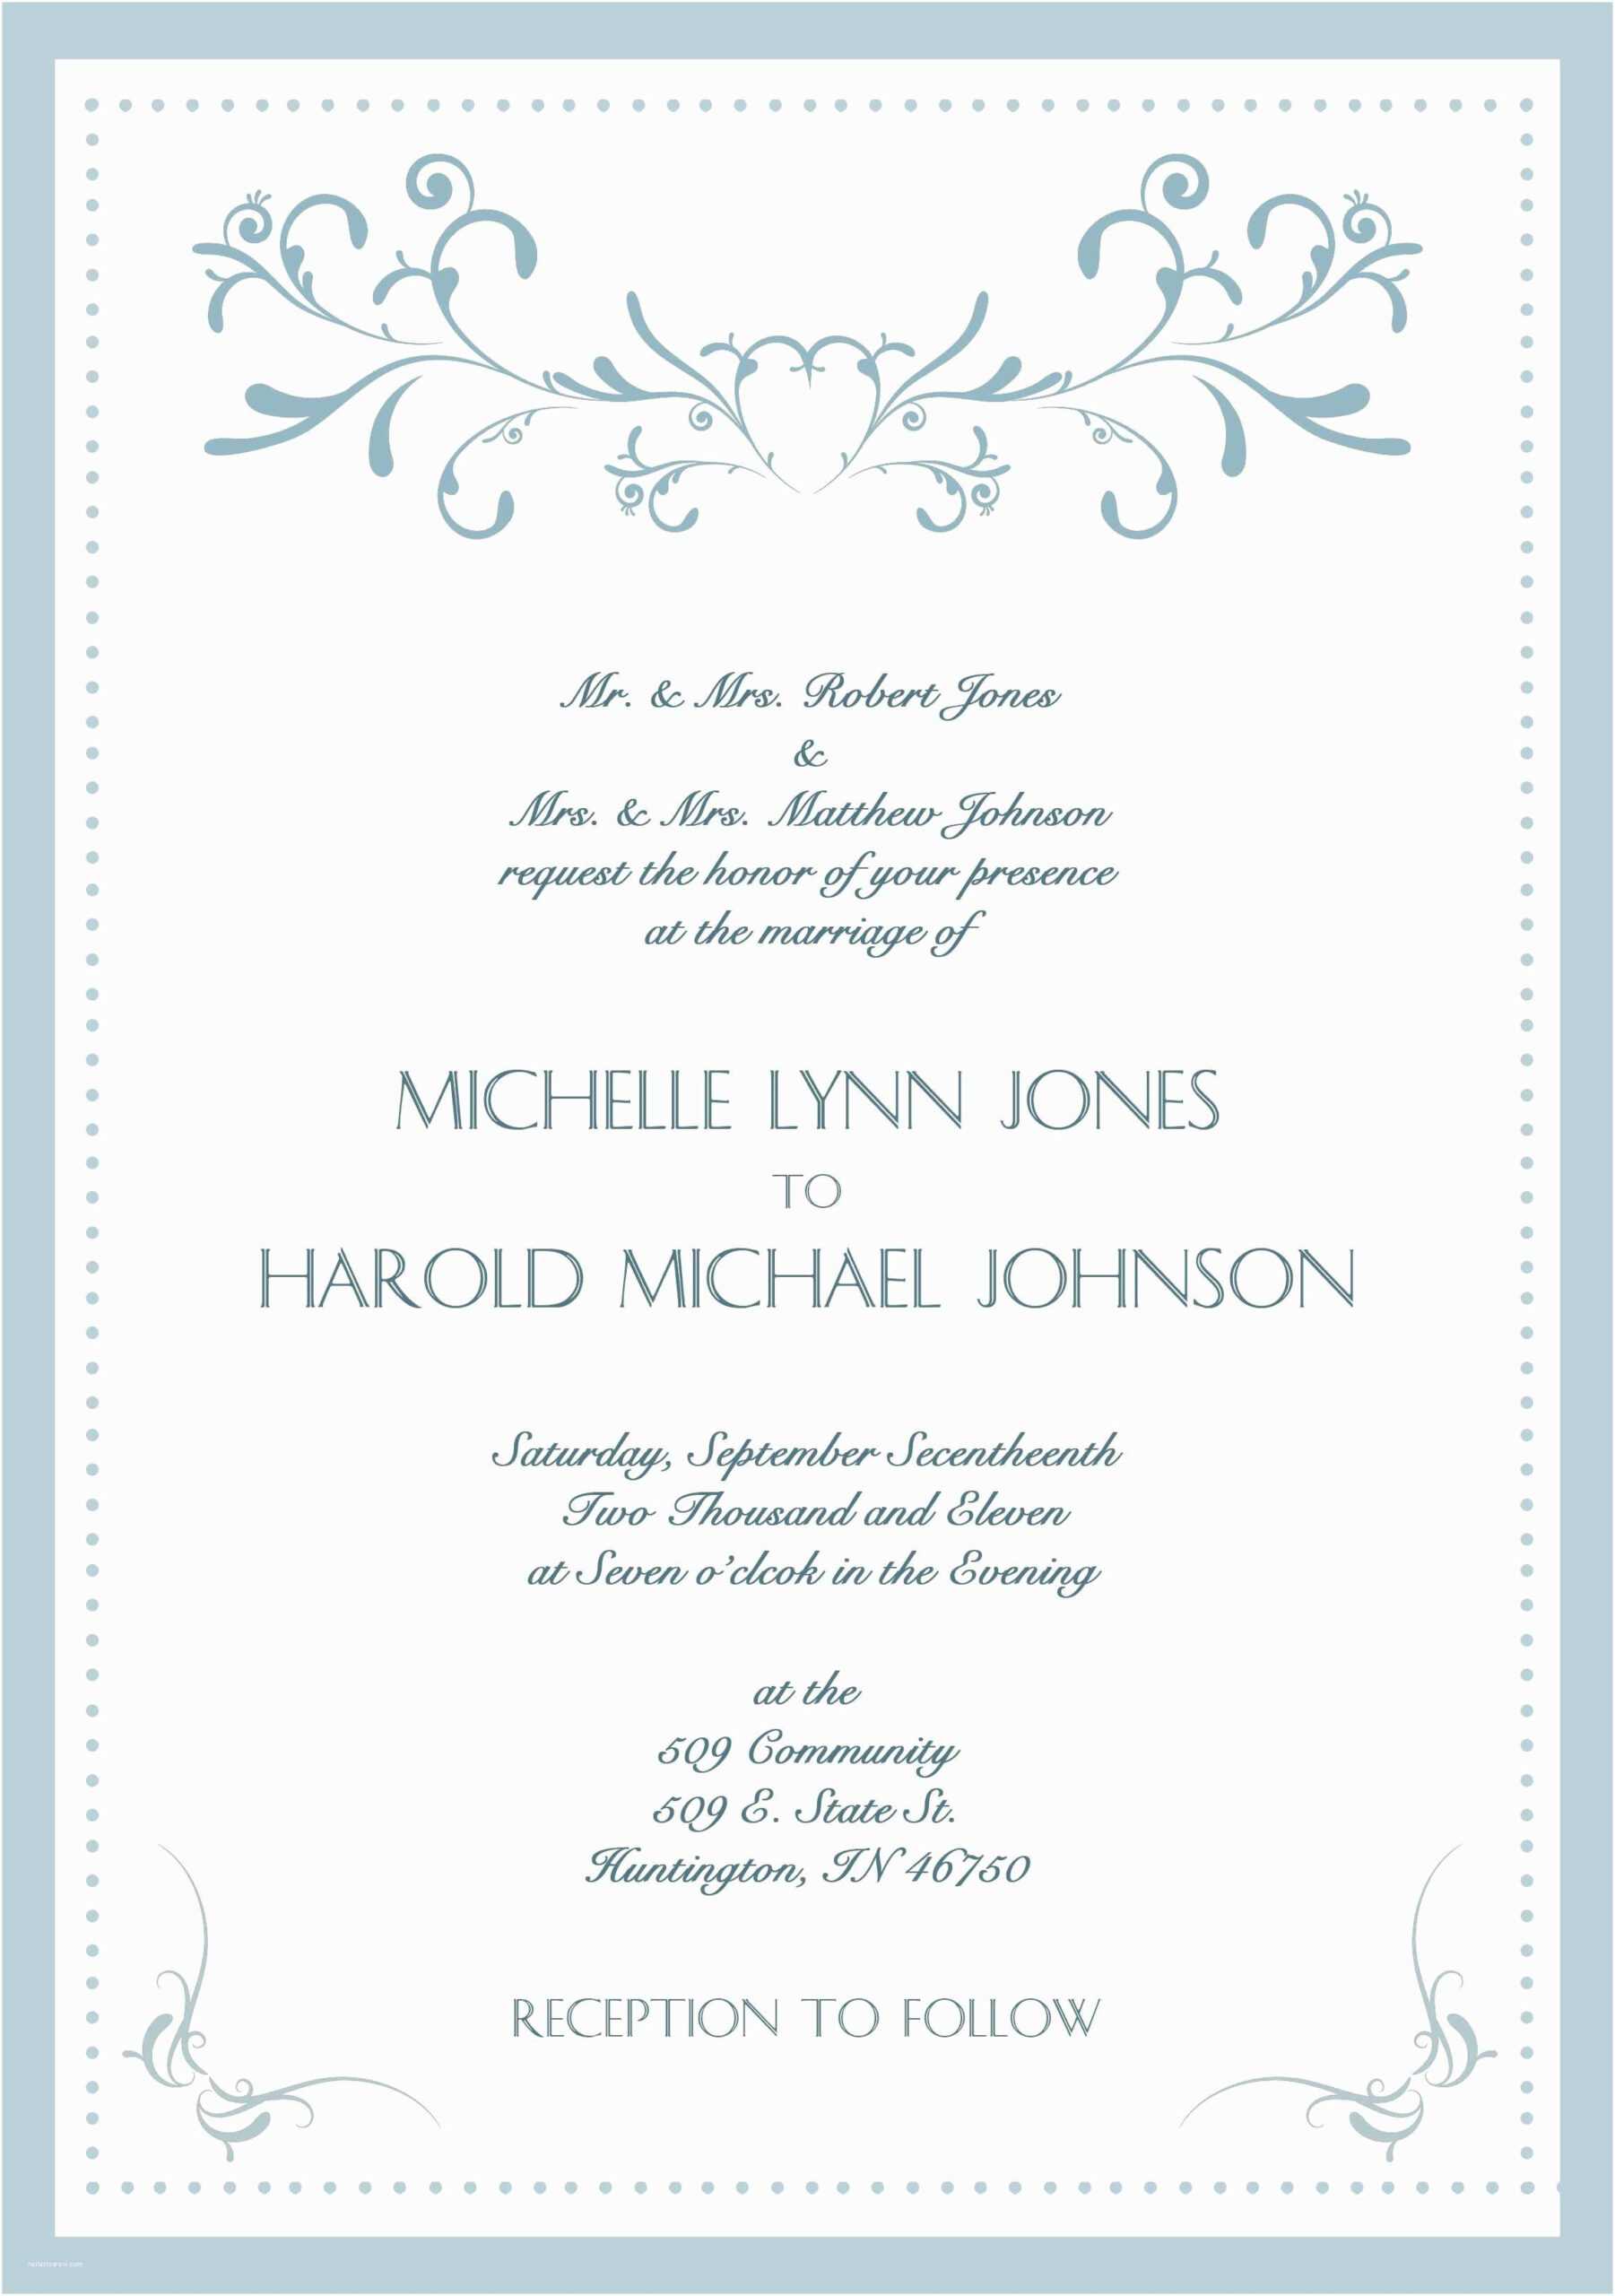 Wedding Invitation Cards Samples Sample Wedding Invitations Throughout Sample Wedding Invitation Cards Templates